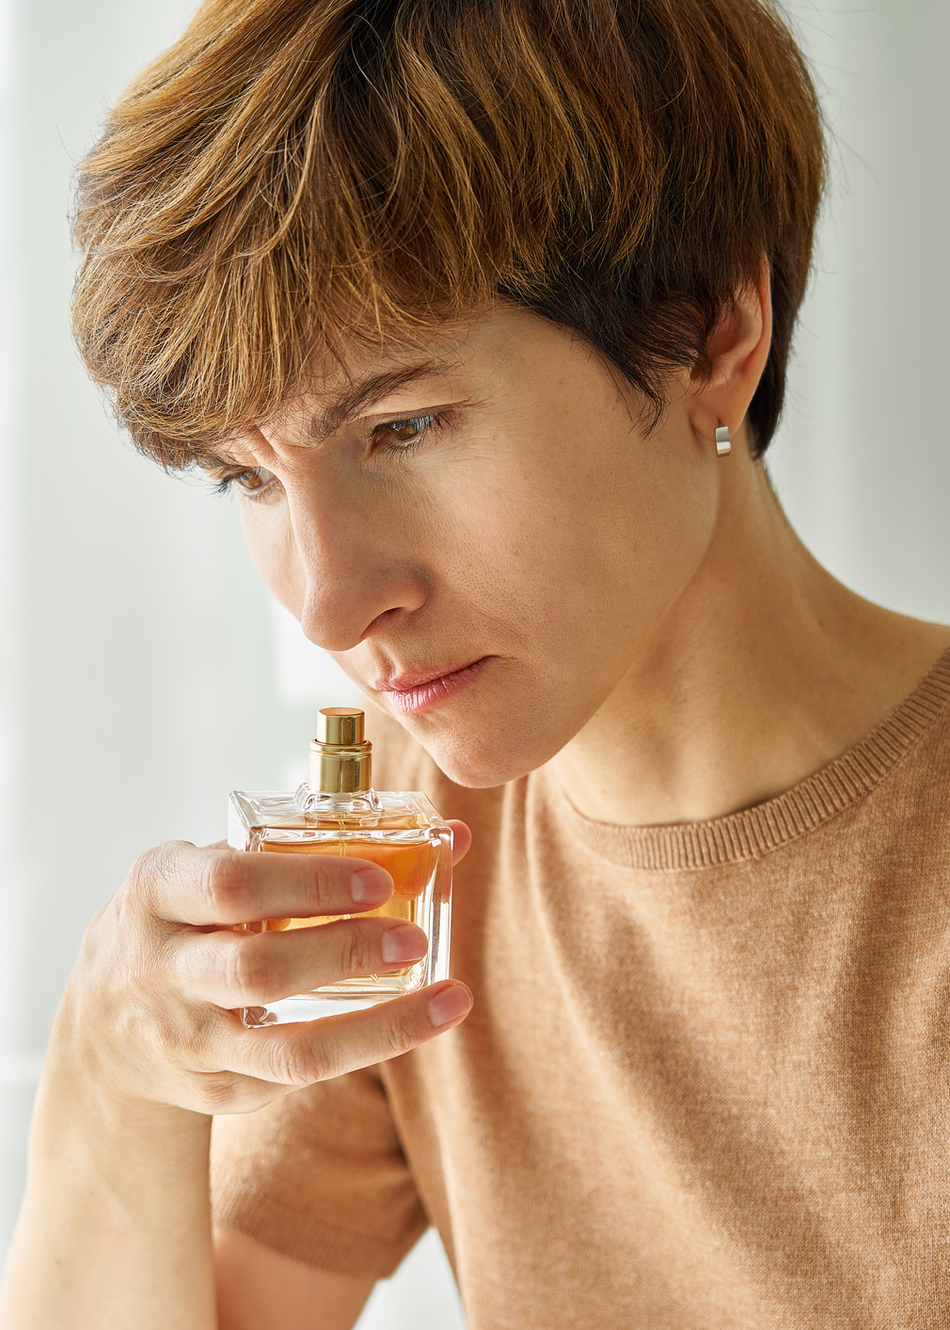 Is Parosmia or the Loss of Smell Dangerous?